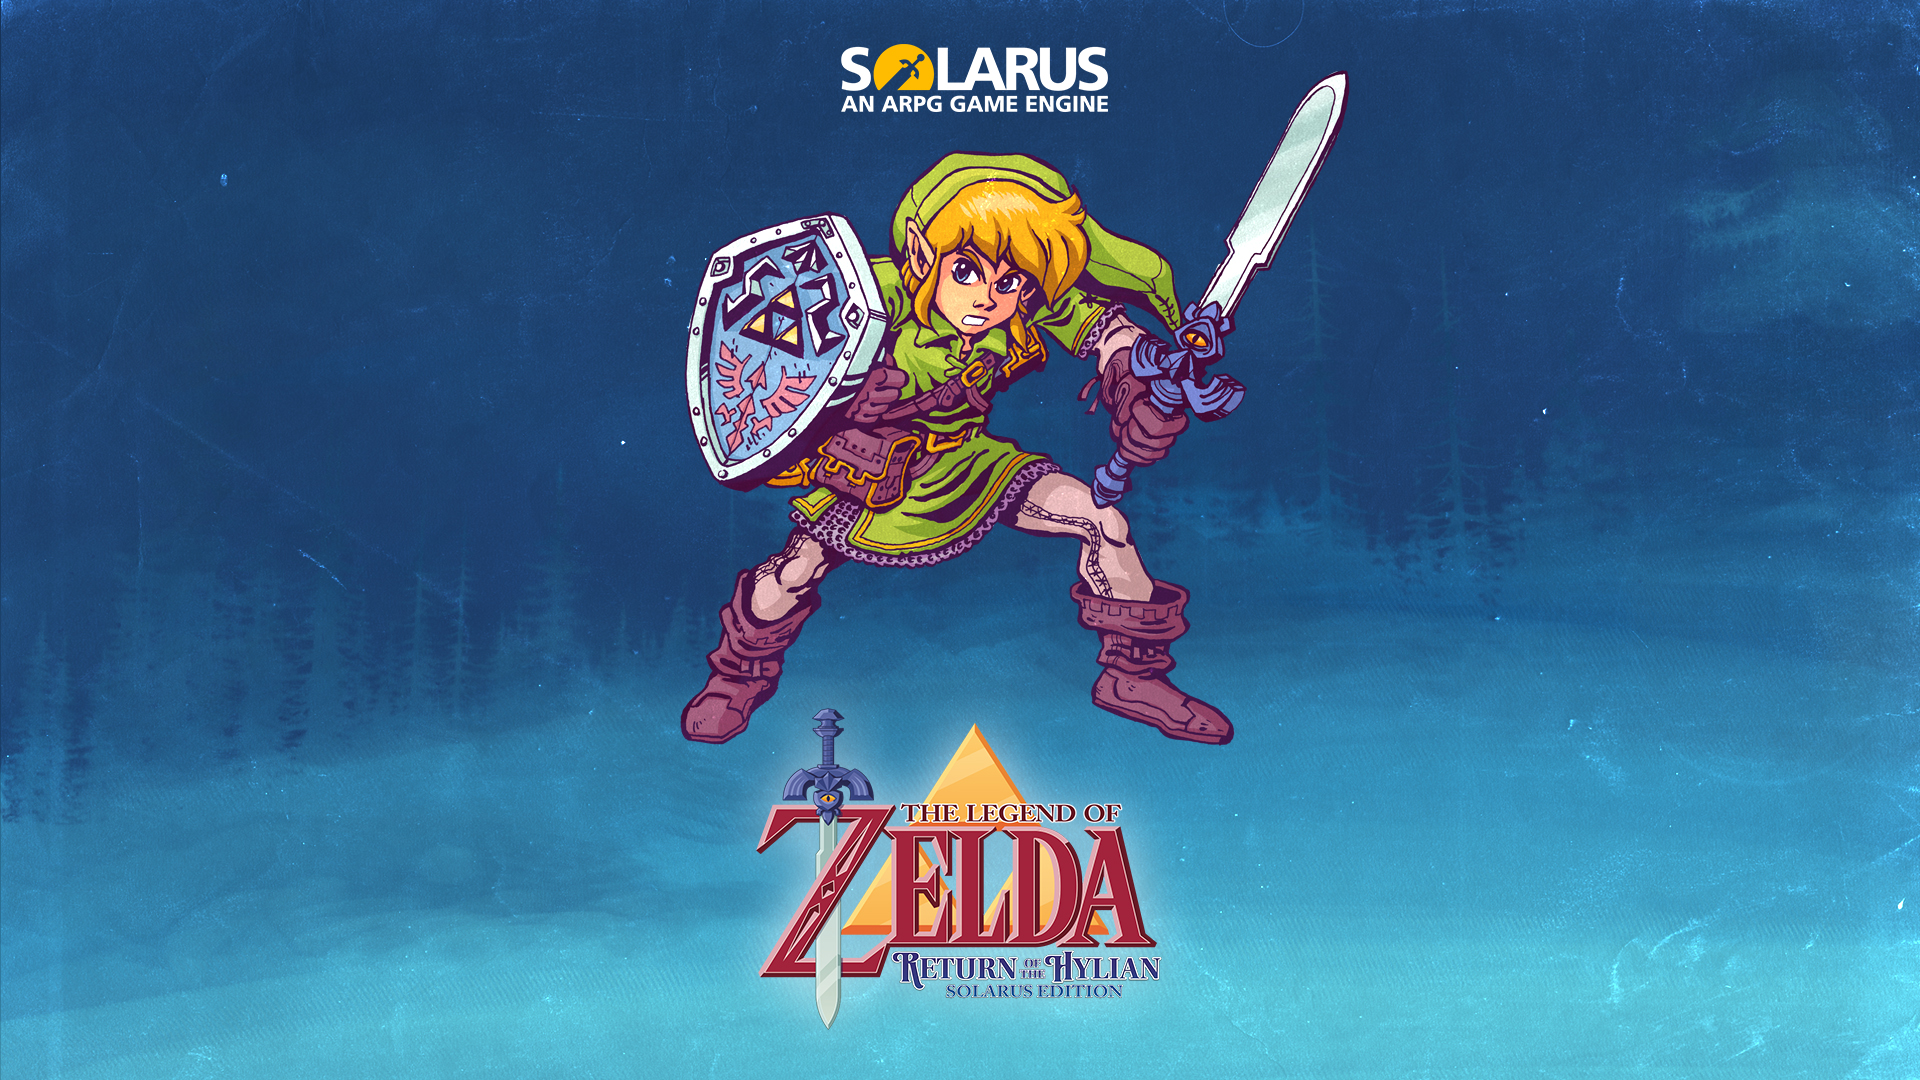 The Legend of Zelda: Return of the Hylian (Solarus Edition)